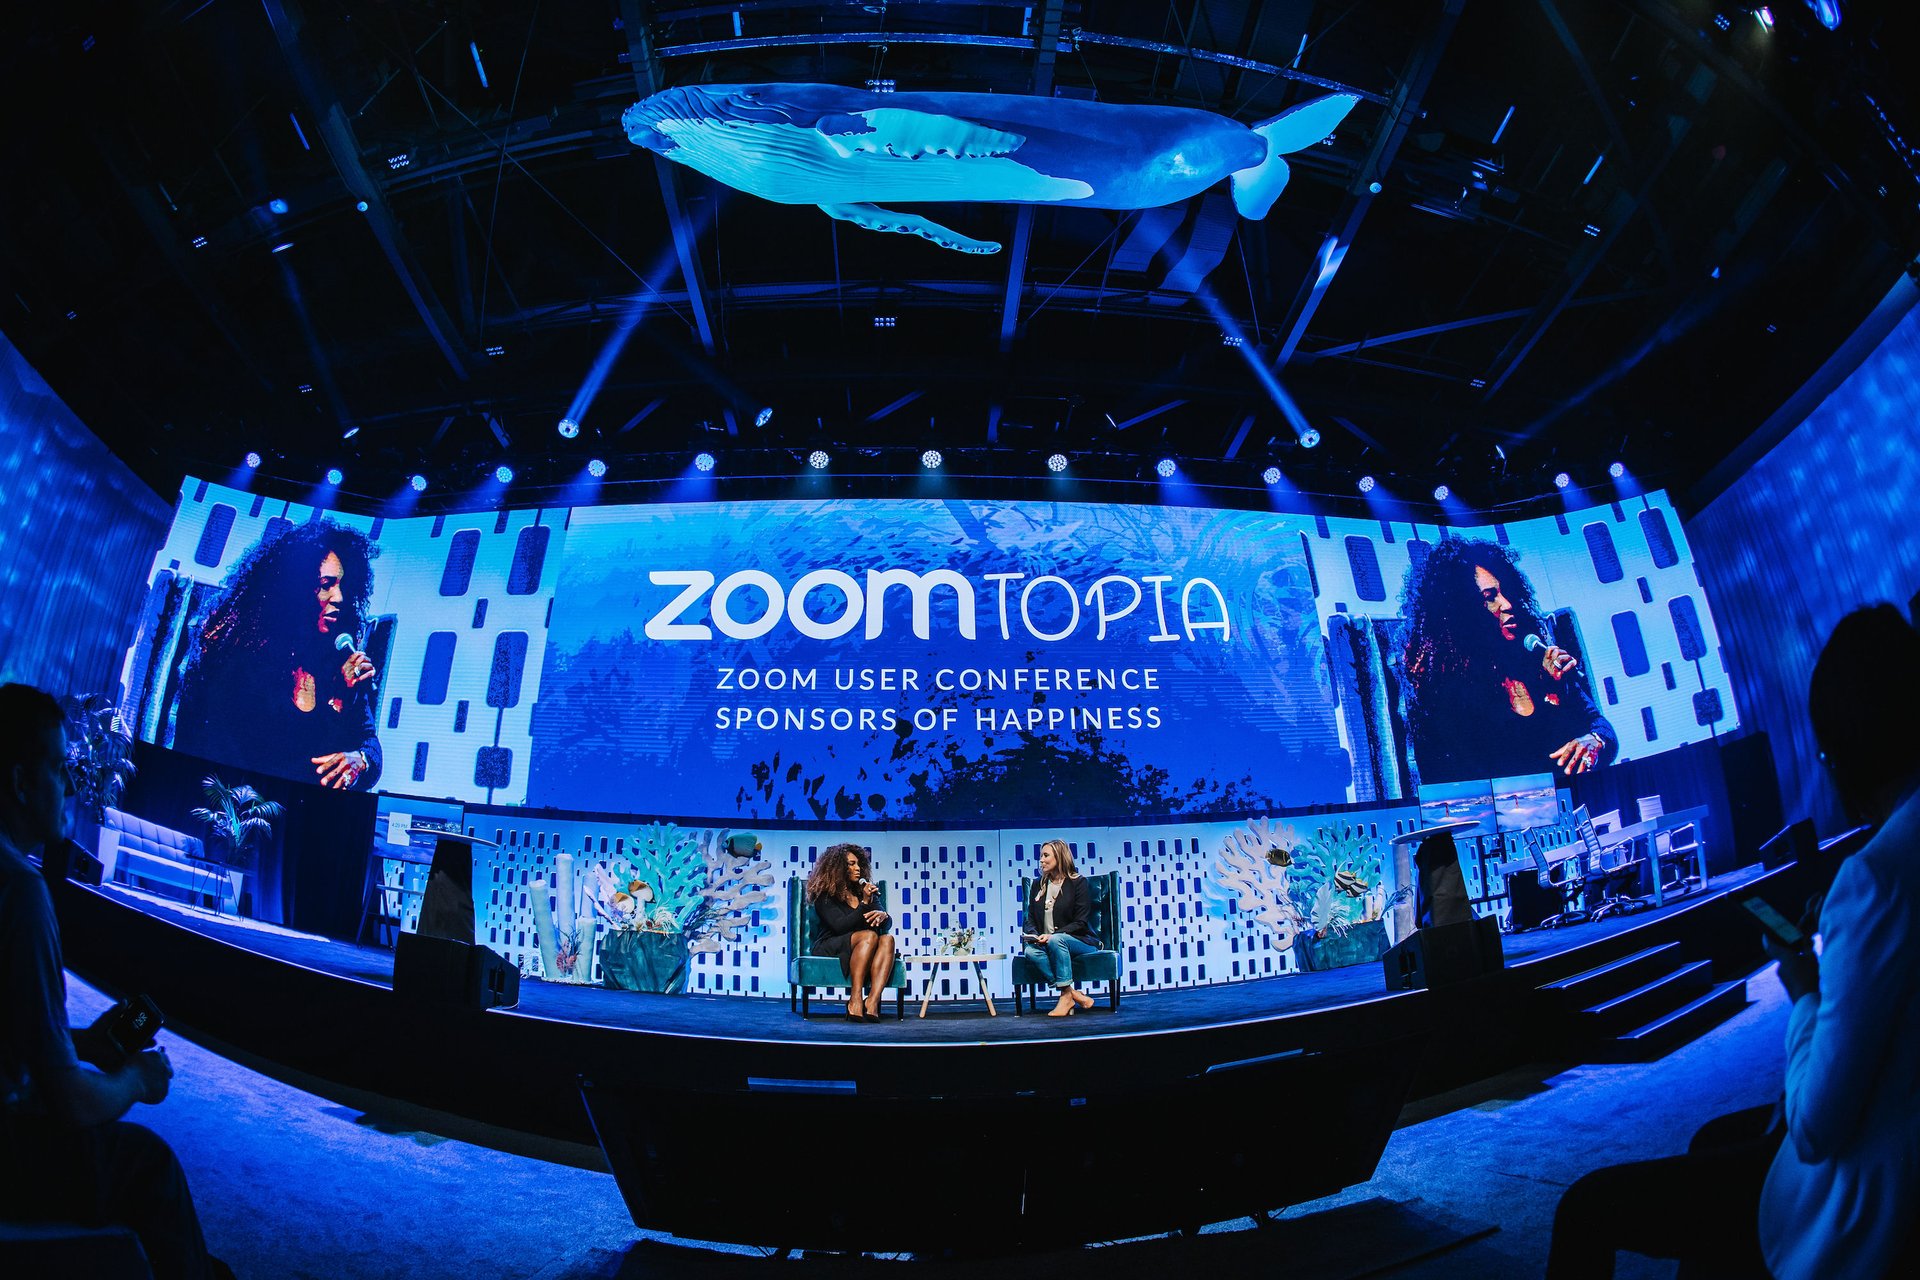 Zoomtopia 2018 Conference / Summit in San Jose, CA The Vendry